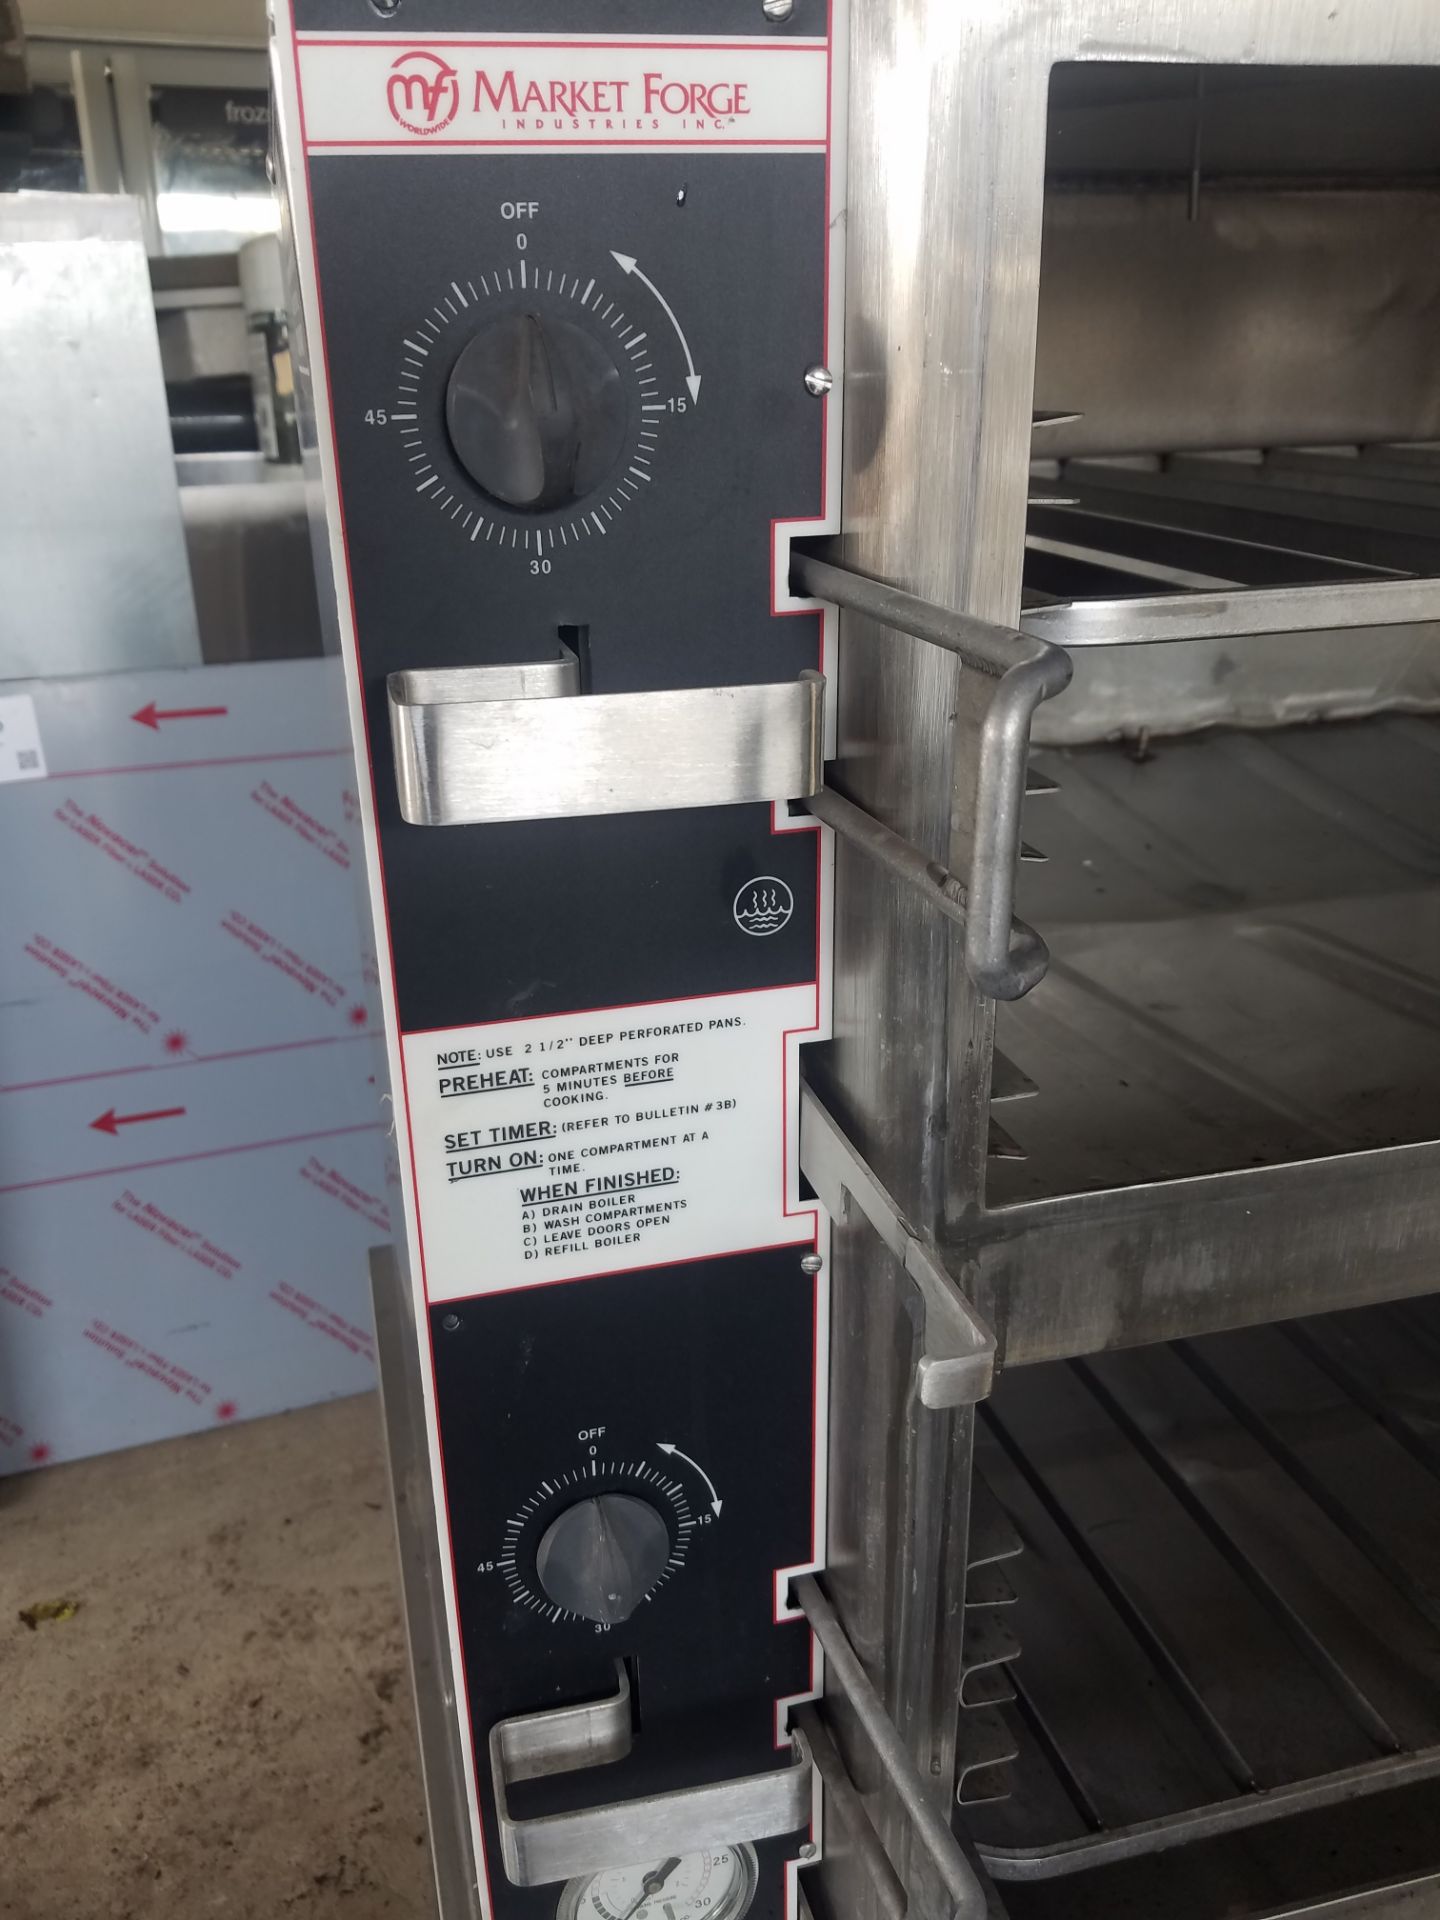 Market Forge Gas Steam Oven, Model 2A1, S/N 216508 (Rigging, Loading & Site Management Fee $50.00 - Bild 4 aus 5